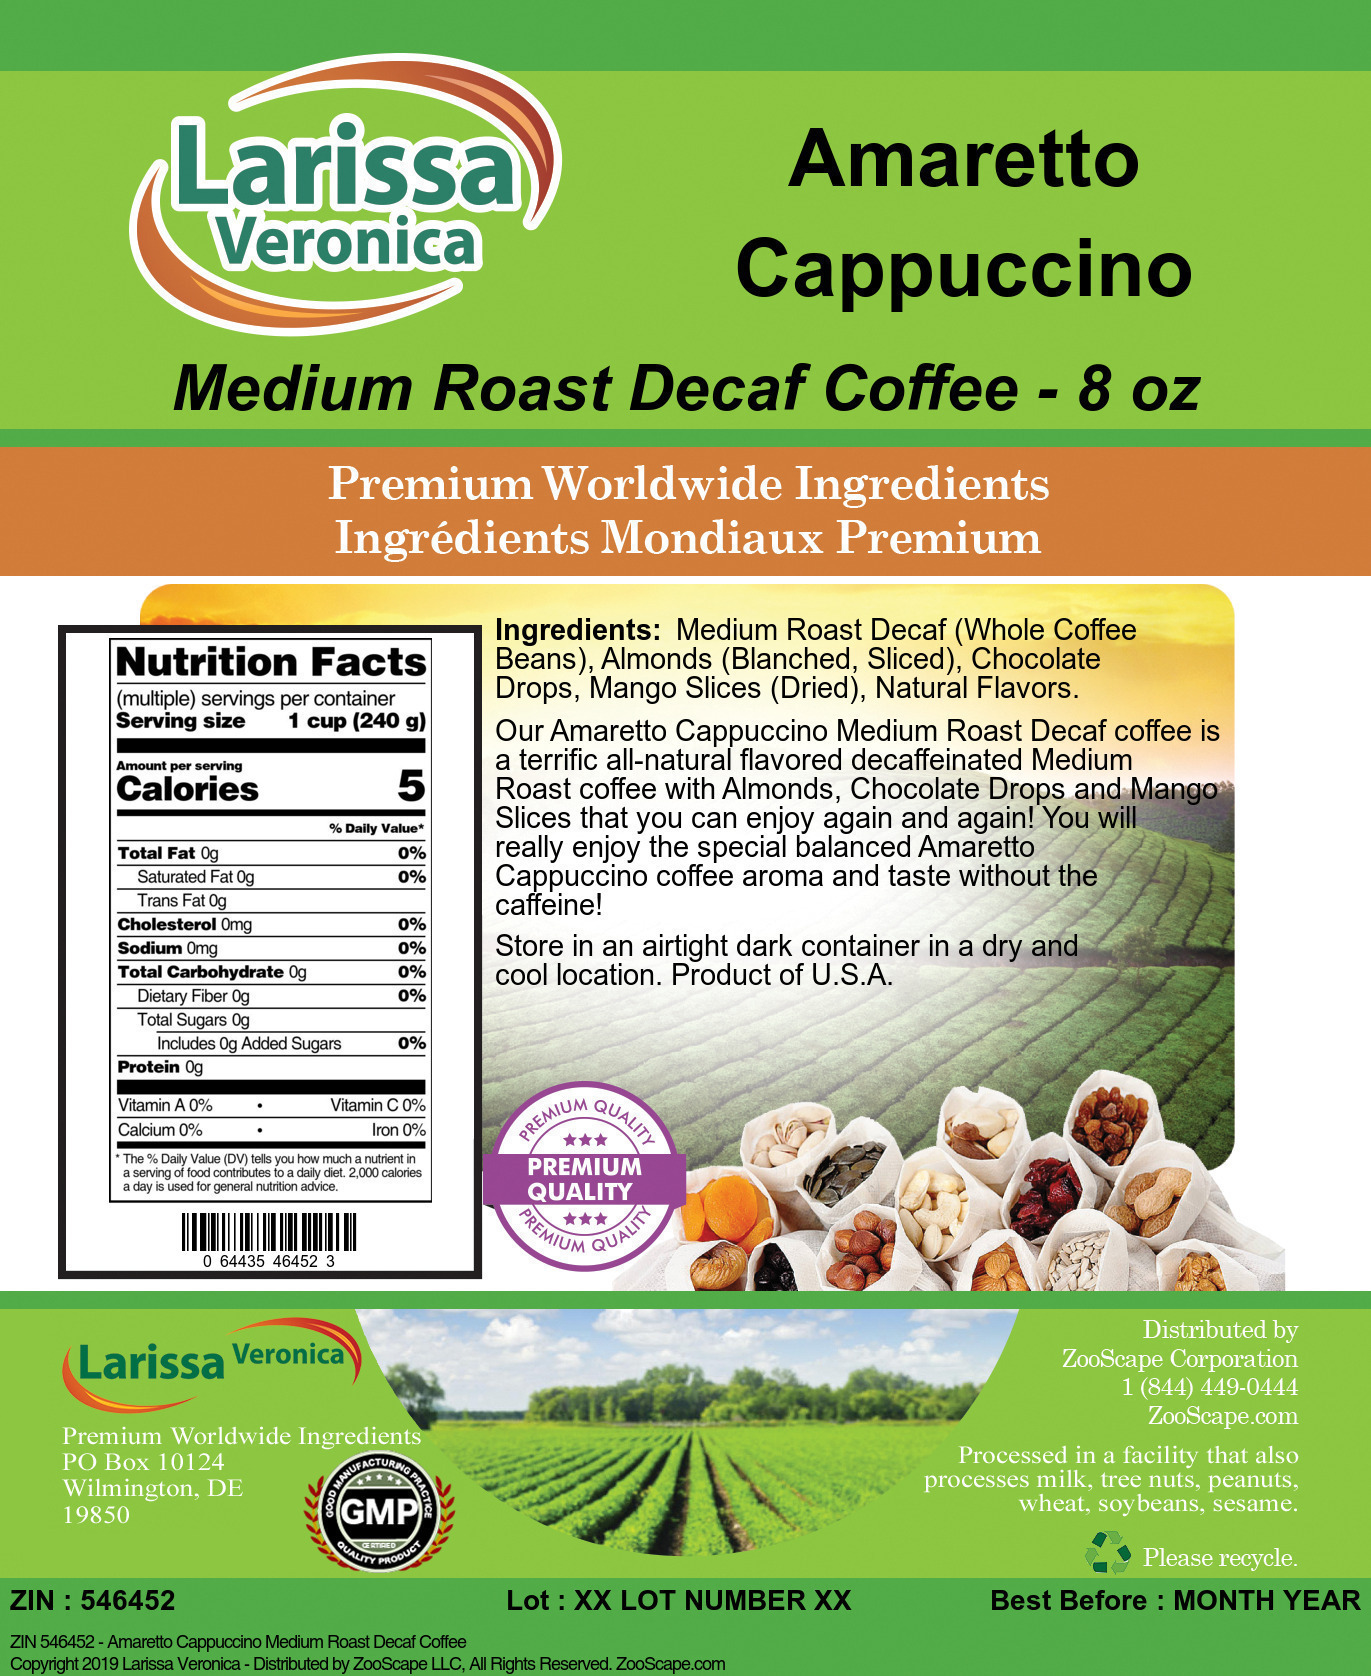 Amaretto Cappuccino Medium Roast Decaf Coffee - Label